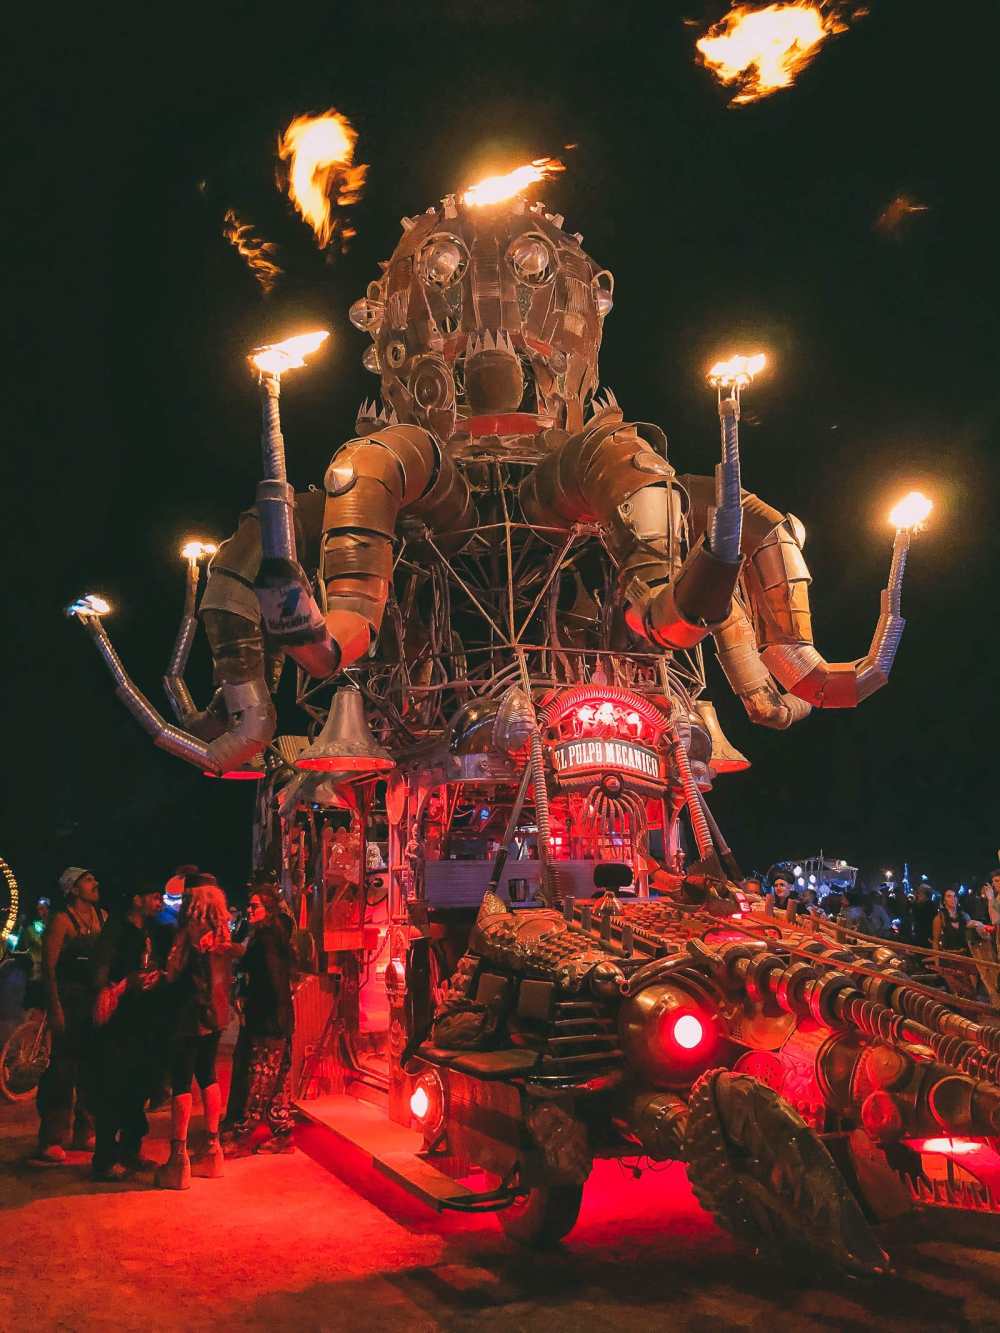  Руководство для новичков по Burning Man (33) 